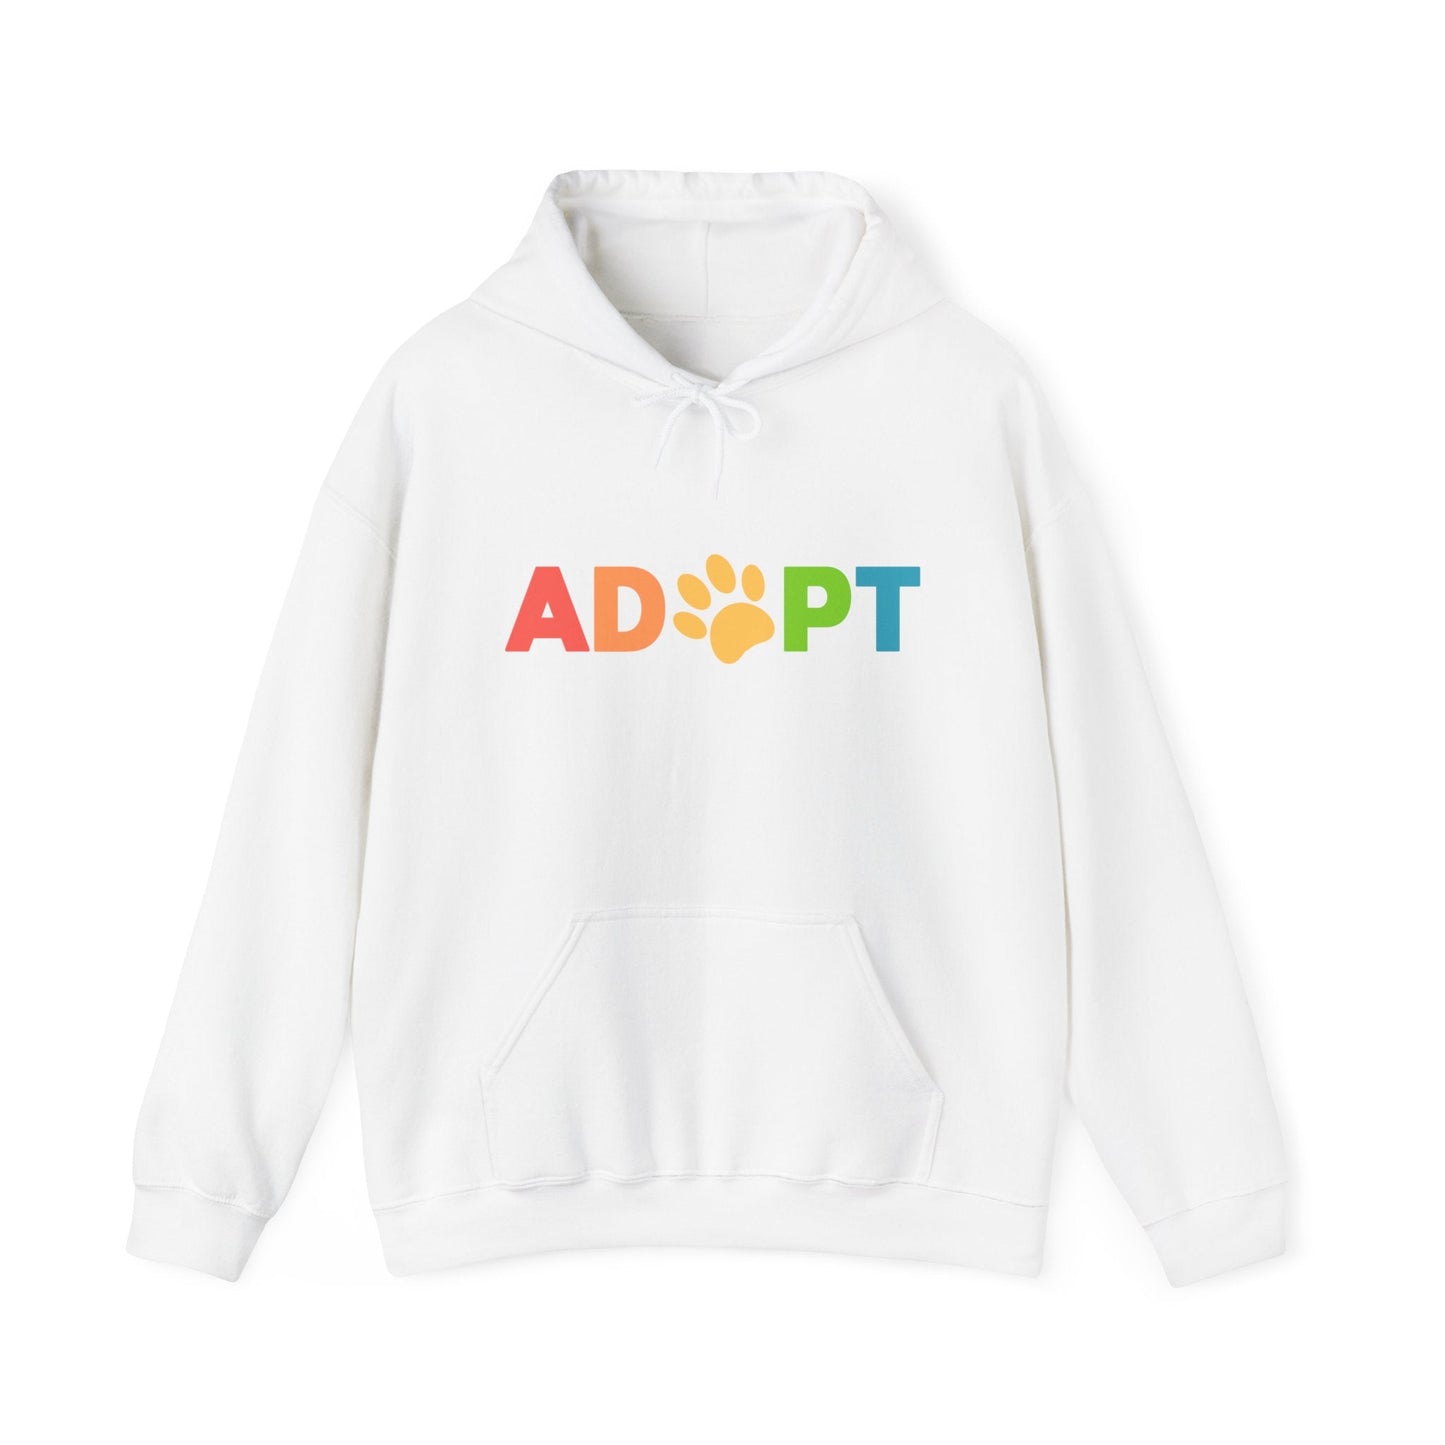 Adopt Rainbow | Hooded Sweatshirt - Detezi Designs-48131589425276810042